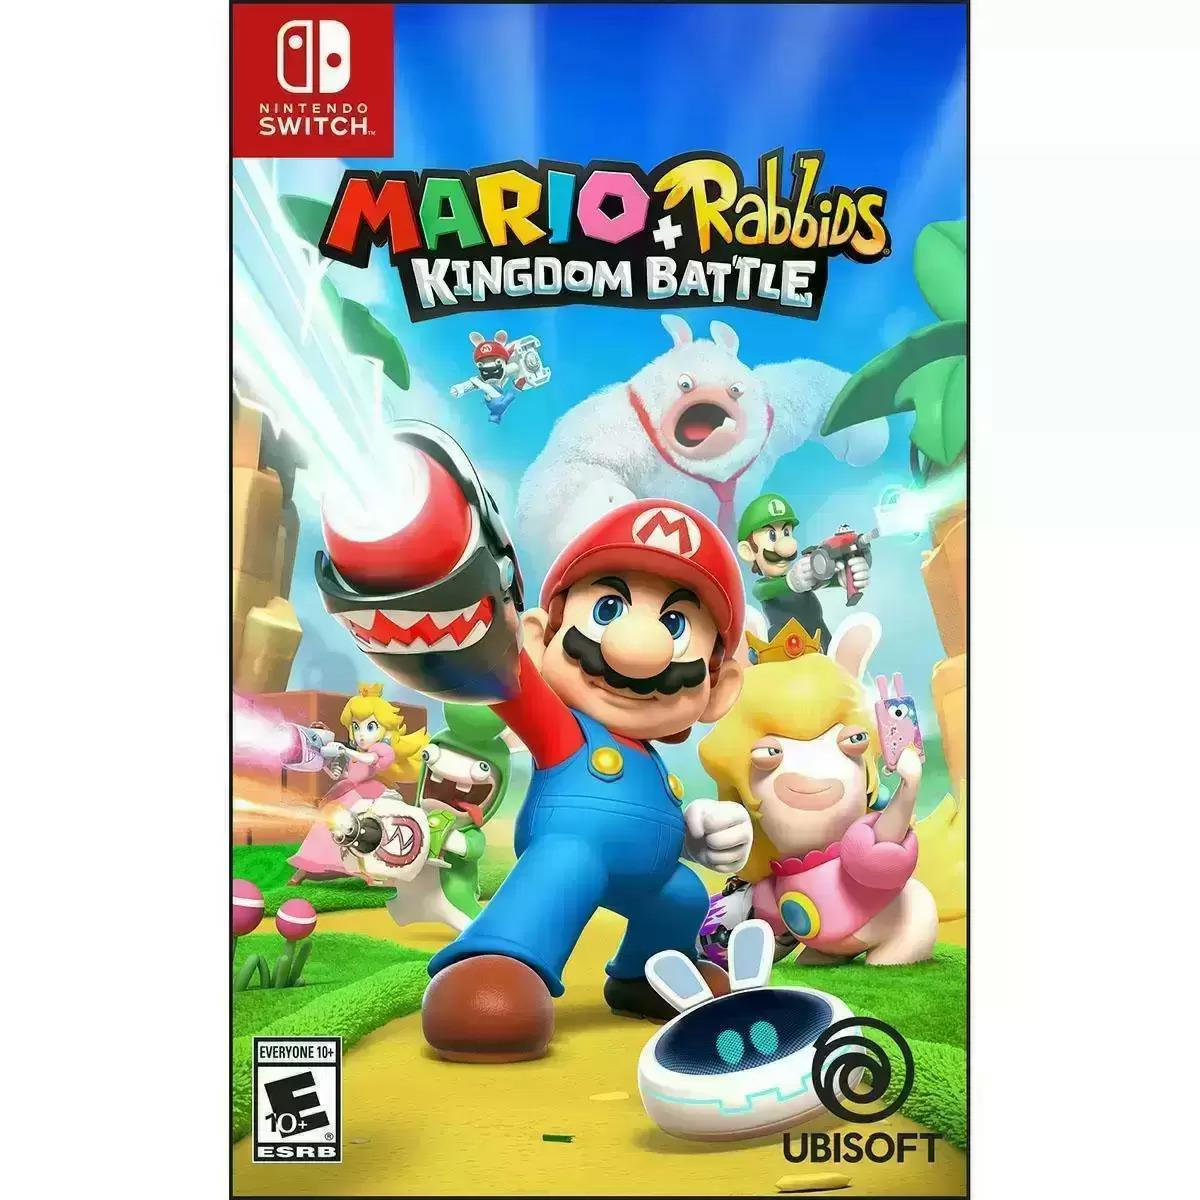 Mario + Rabbids Kingdom Battle Nintendo Switch for $12.99